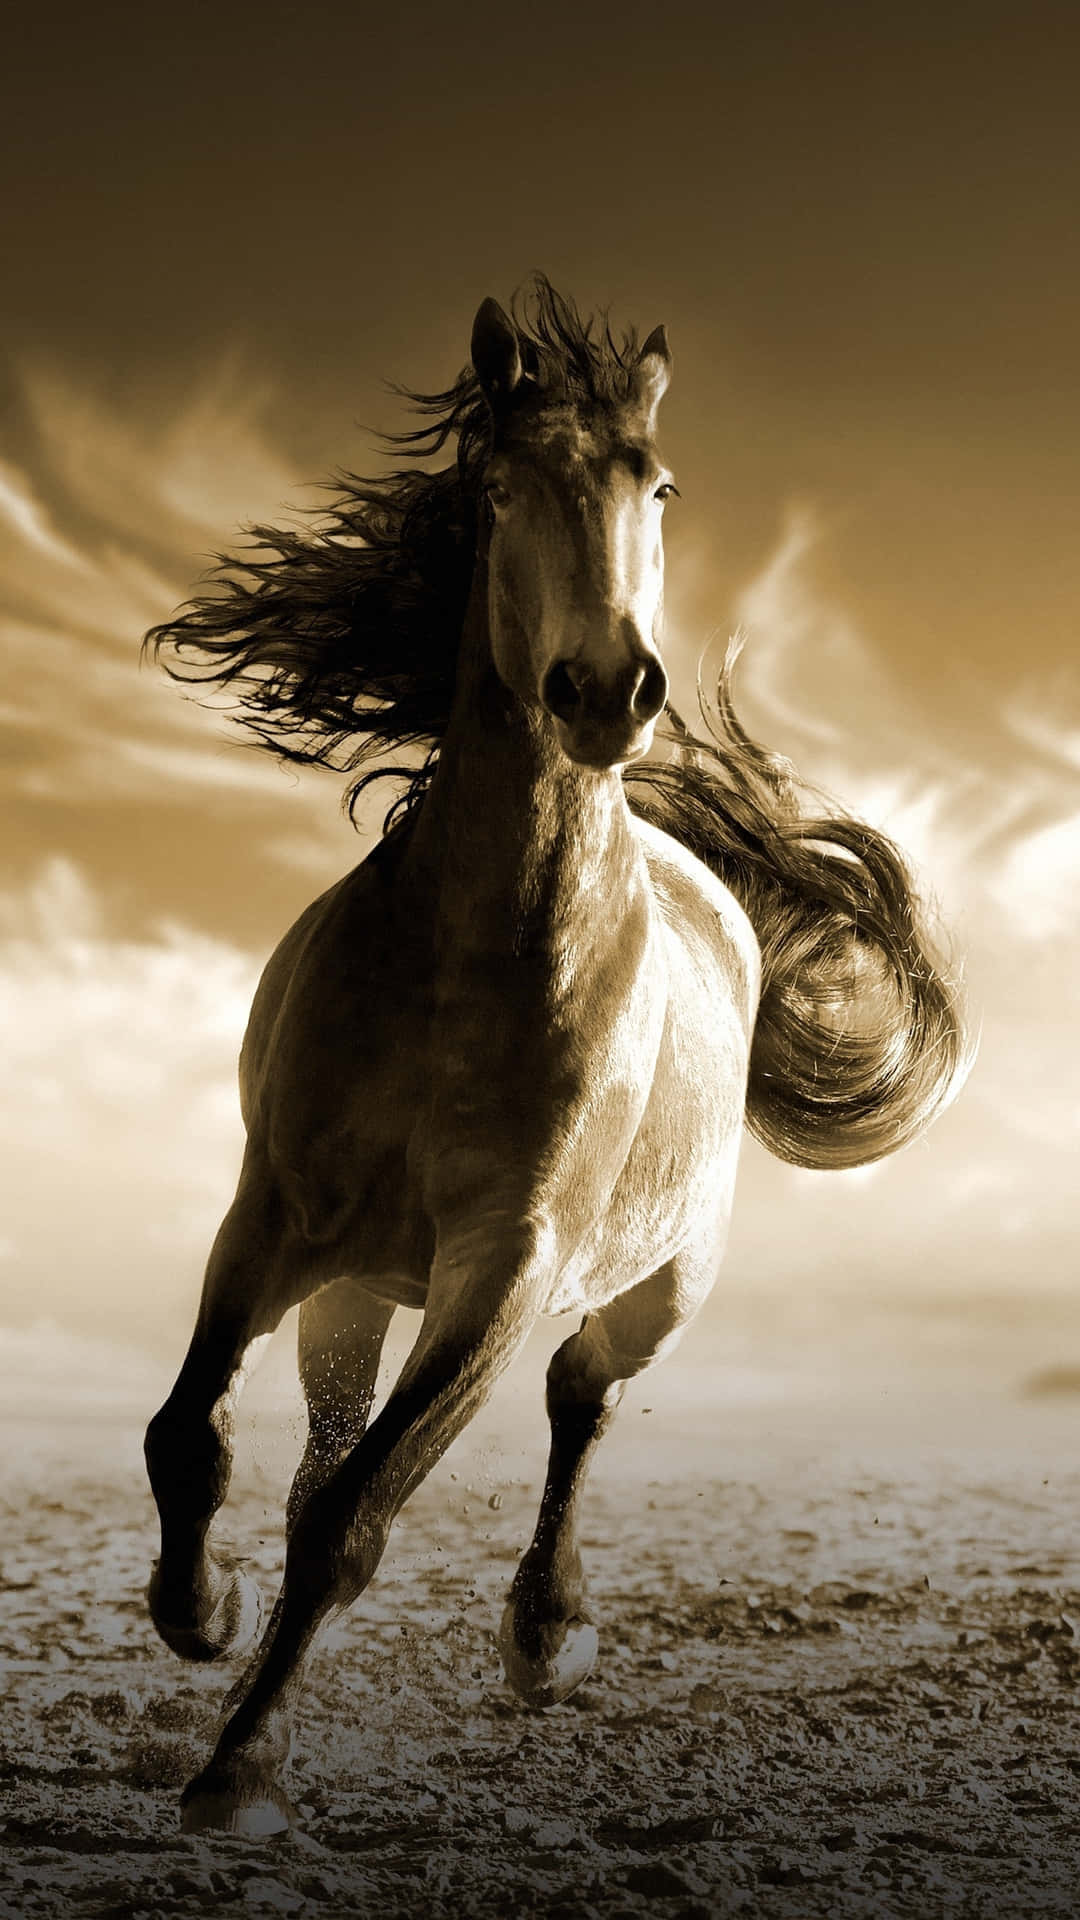 Caption: Majestic Beauty: An Exquisite Horse in Nature's Splendor